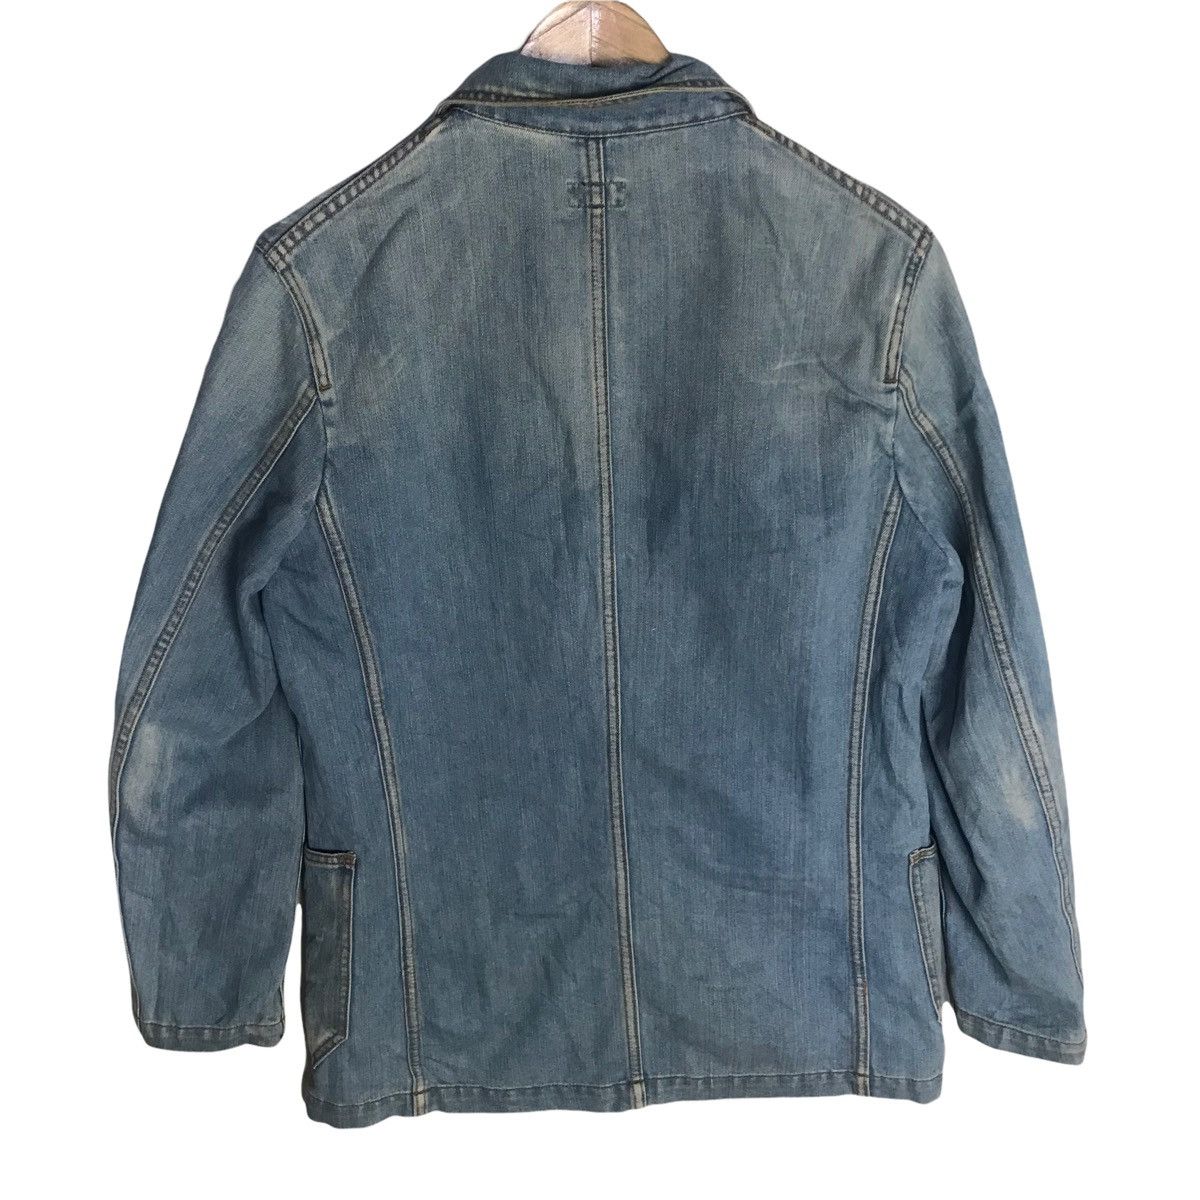 Rare paul smith jeans denim jacket medium size - 2